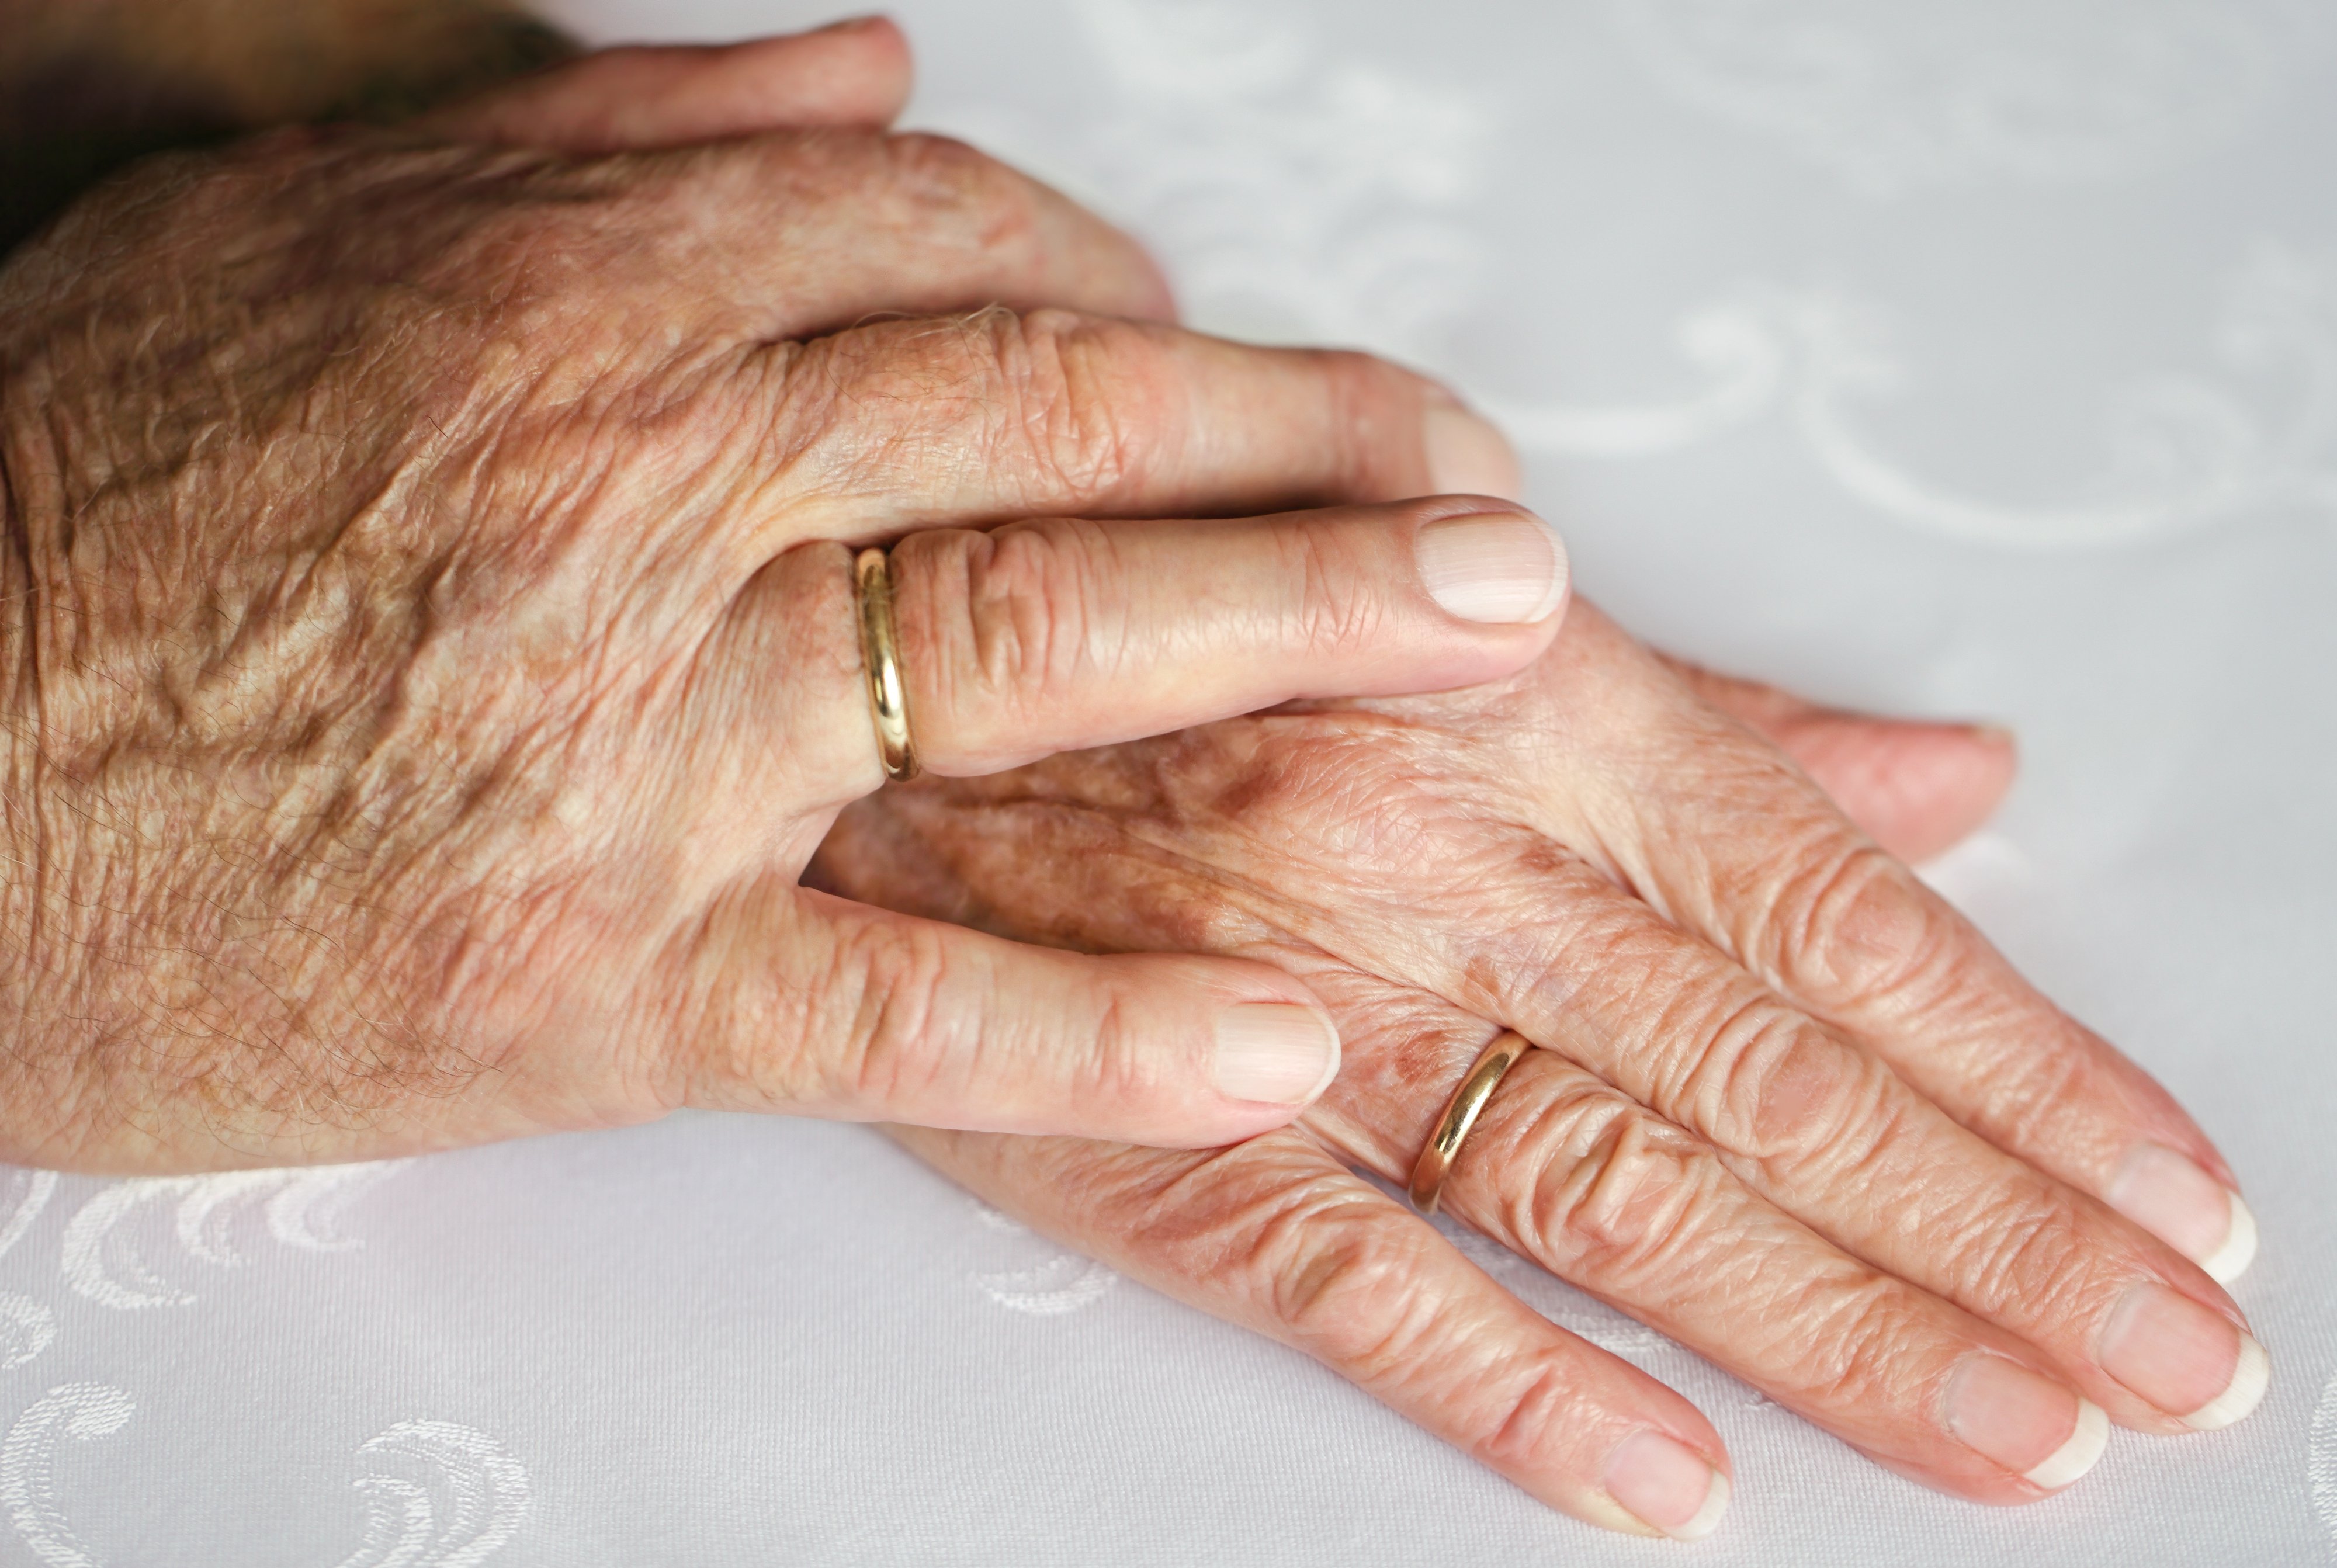 An elderly couple's hands with golden wedding rings. | Source: Shutterstock